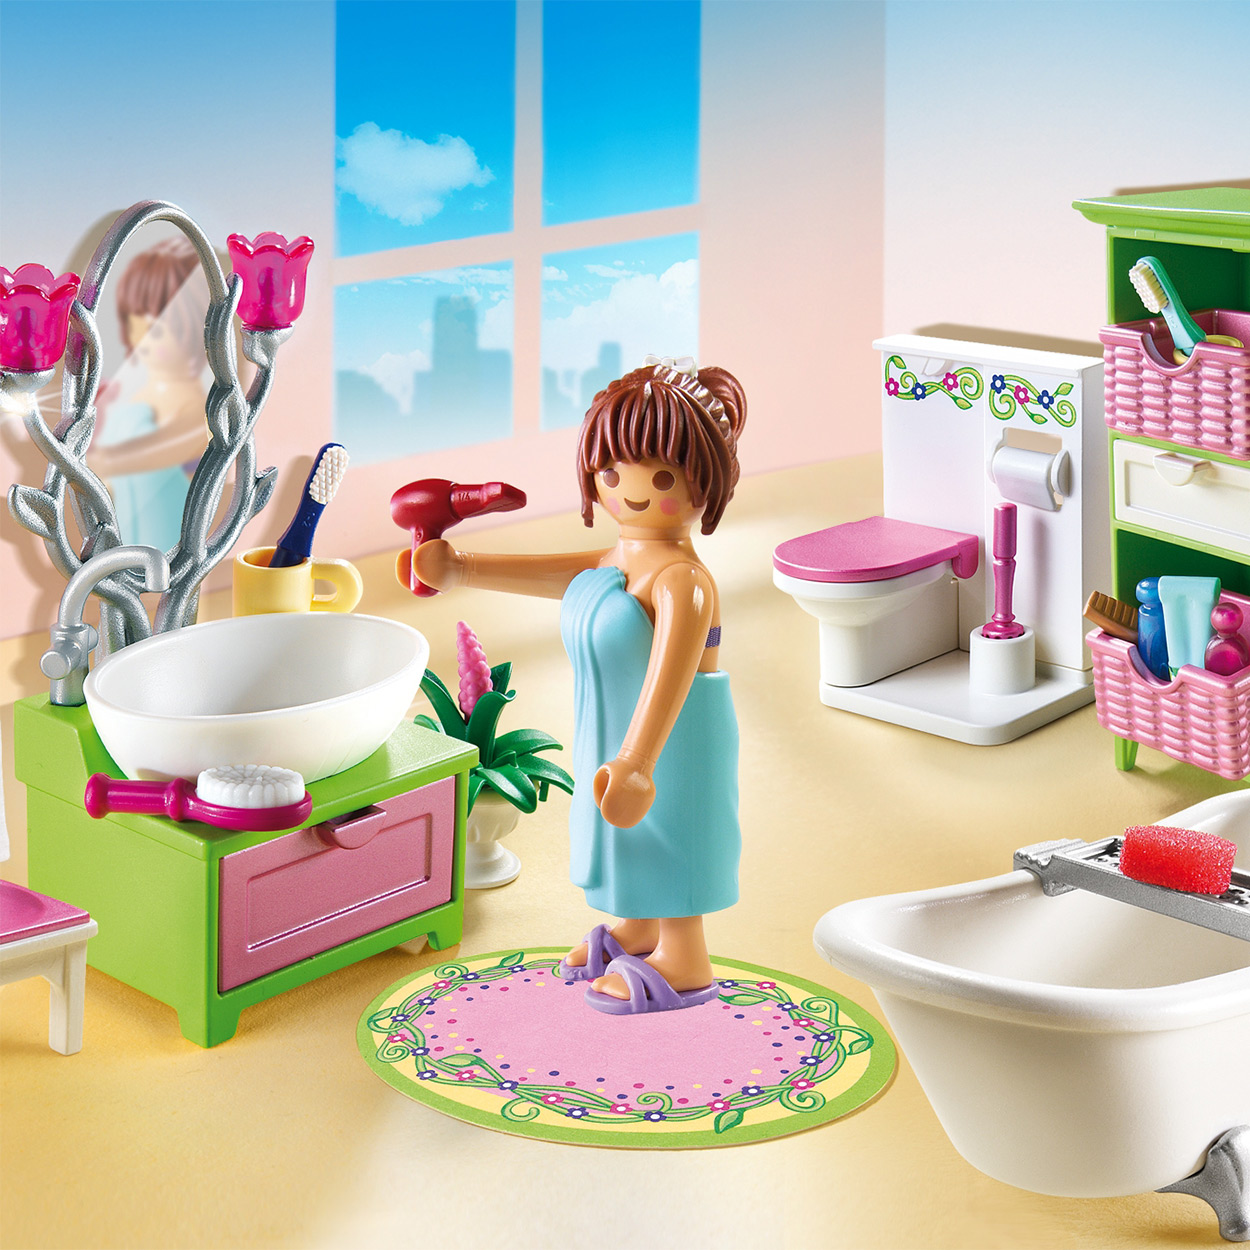 periode regelmatig het beleid Playmobil 5307 Badkamer met bad op pootjes | Thimble Toys